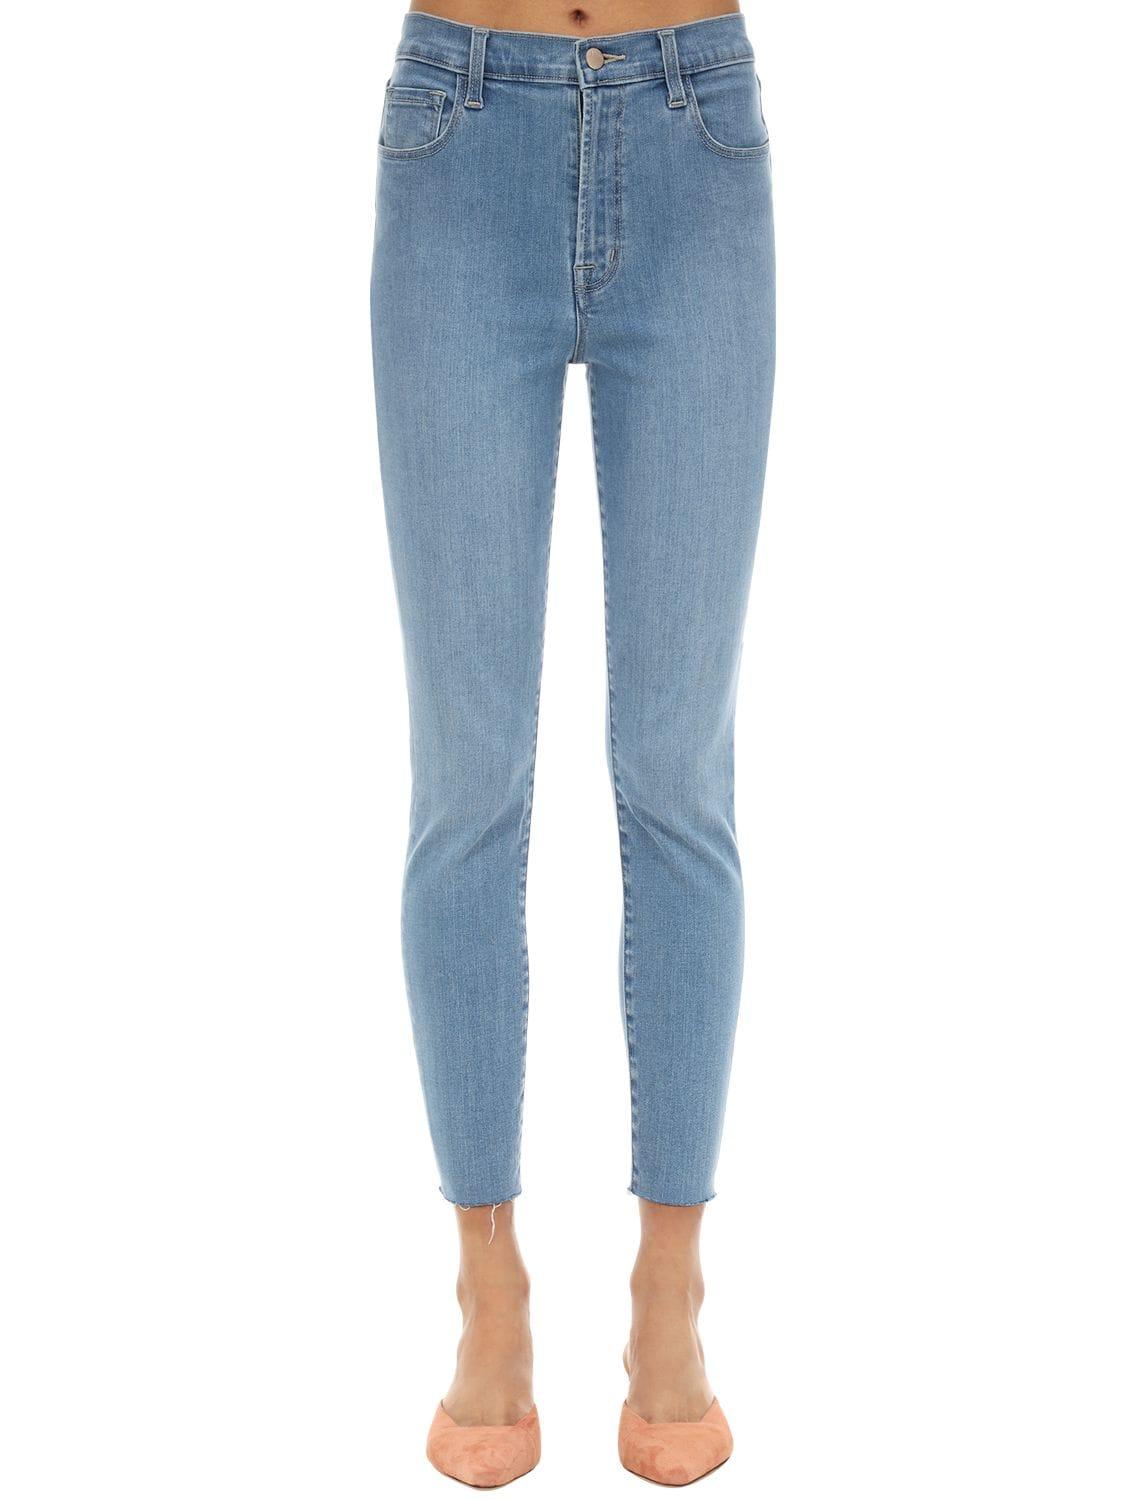 J Brand Leenah High Skinny Stretch Denim Jeans in Blue - Lyst